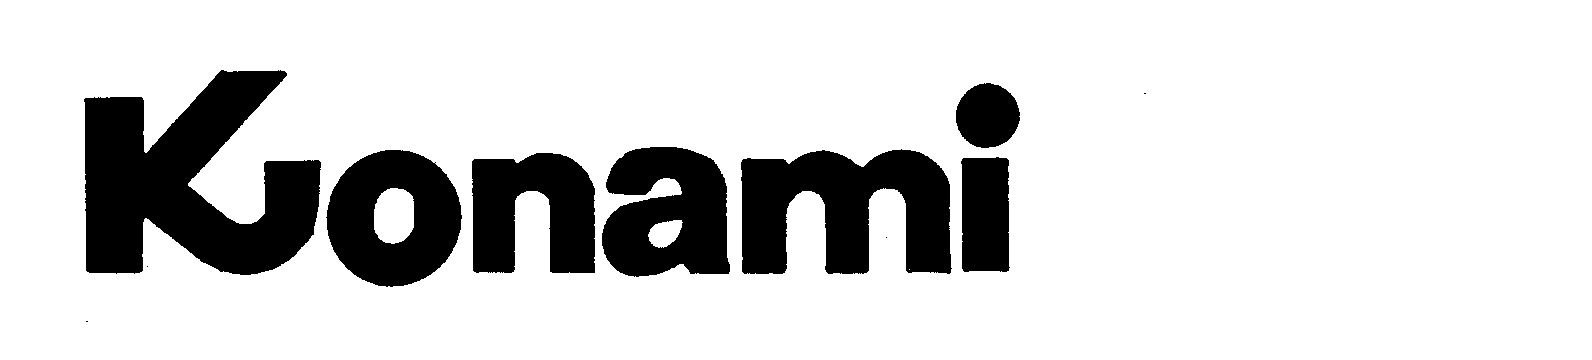 Trademark Logo KONAMI